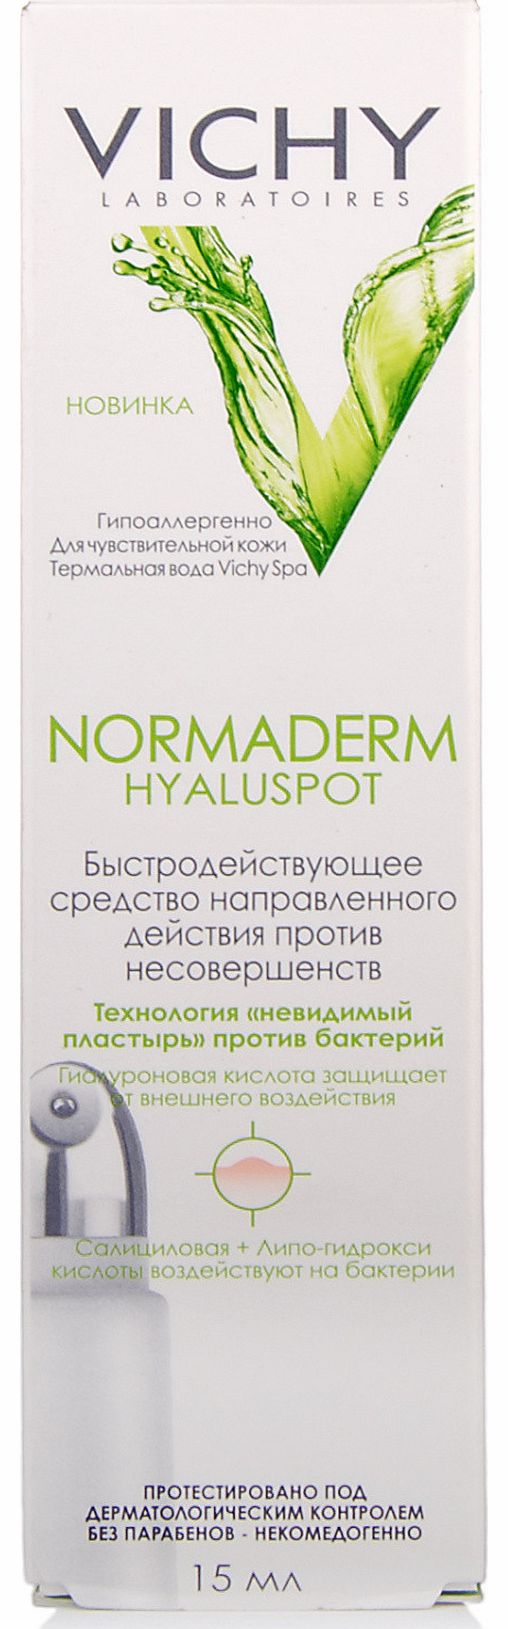 Vichy Normaderm Hyaluspot